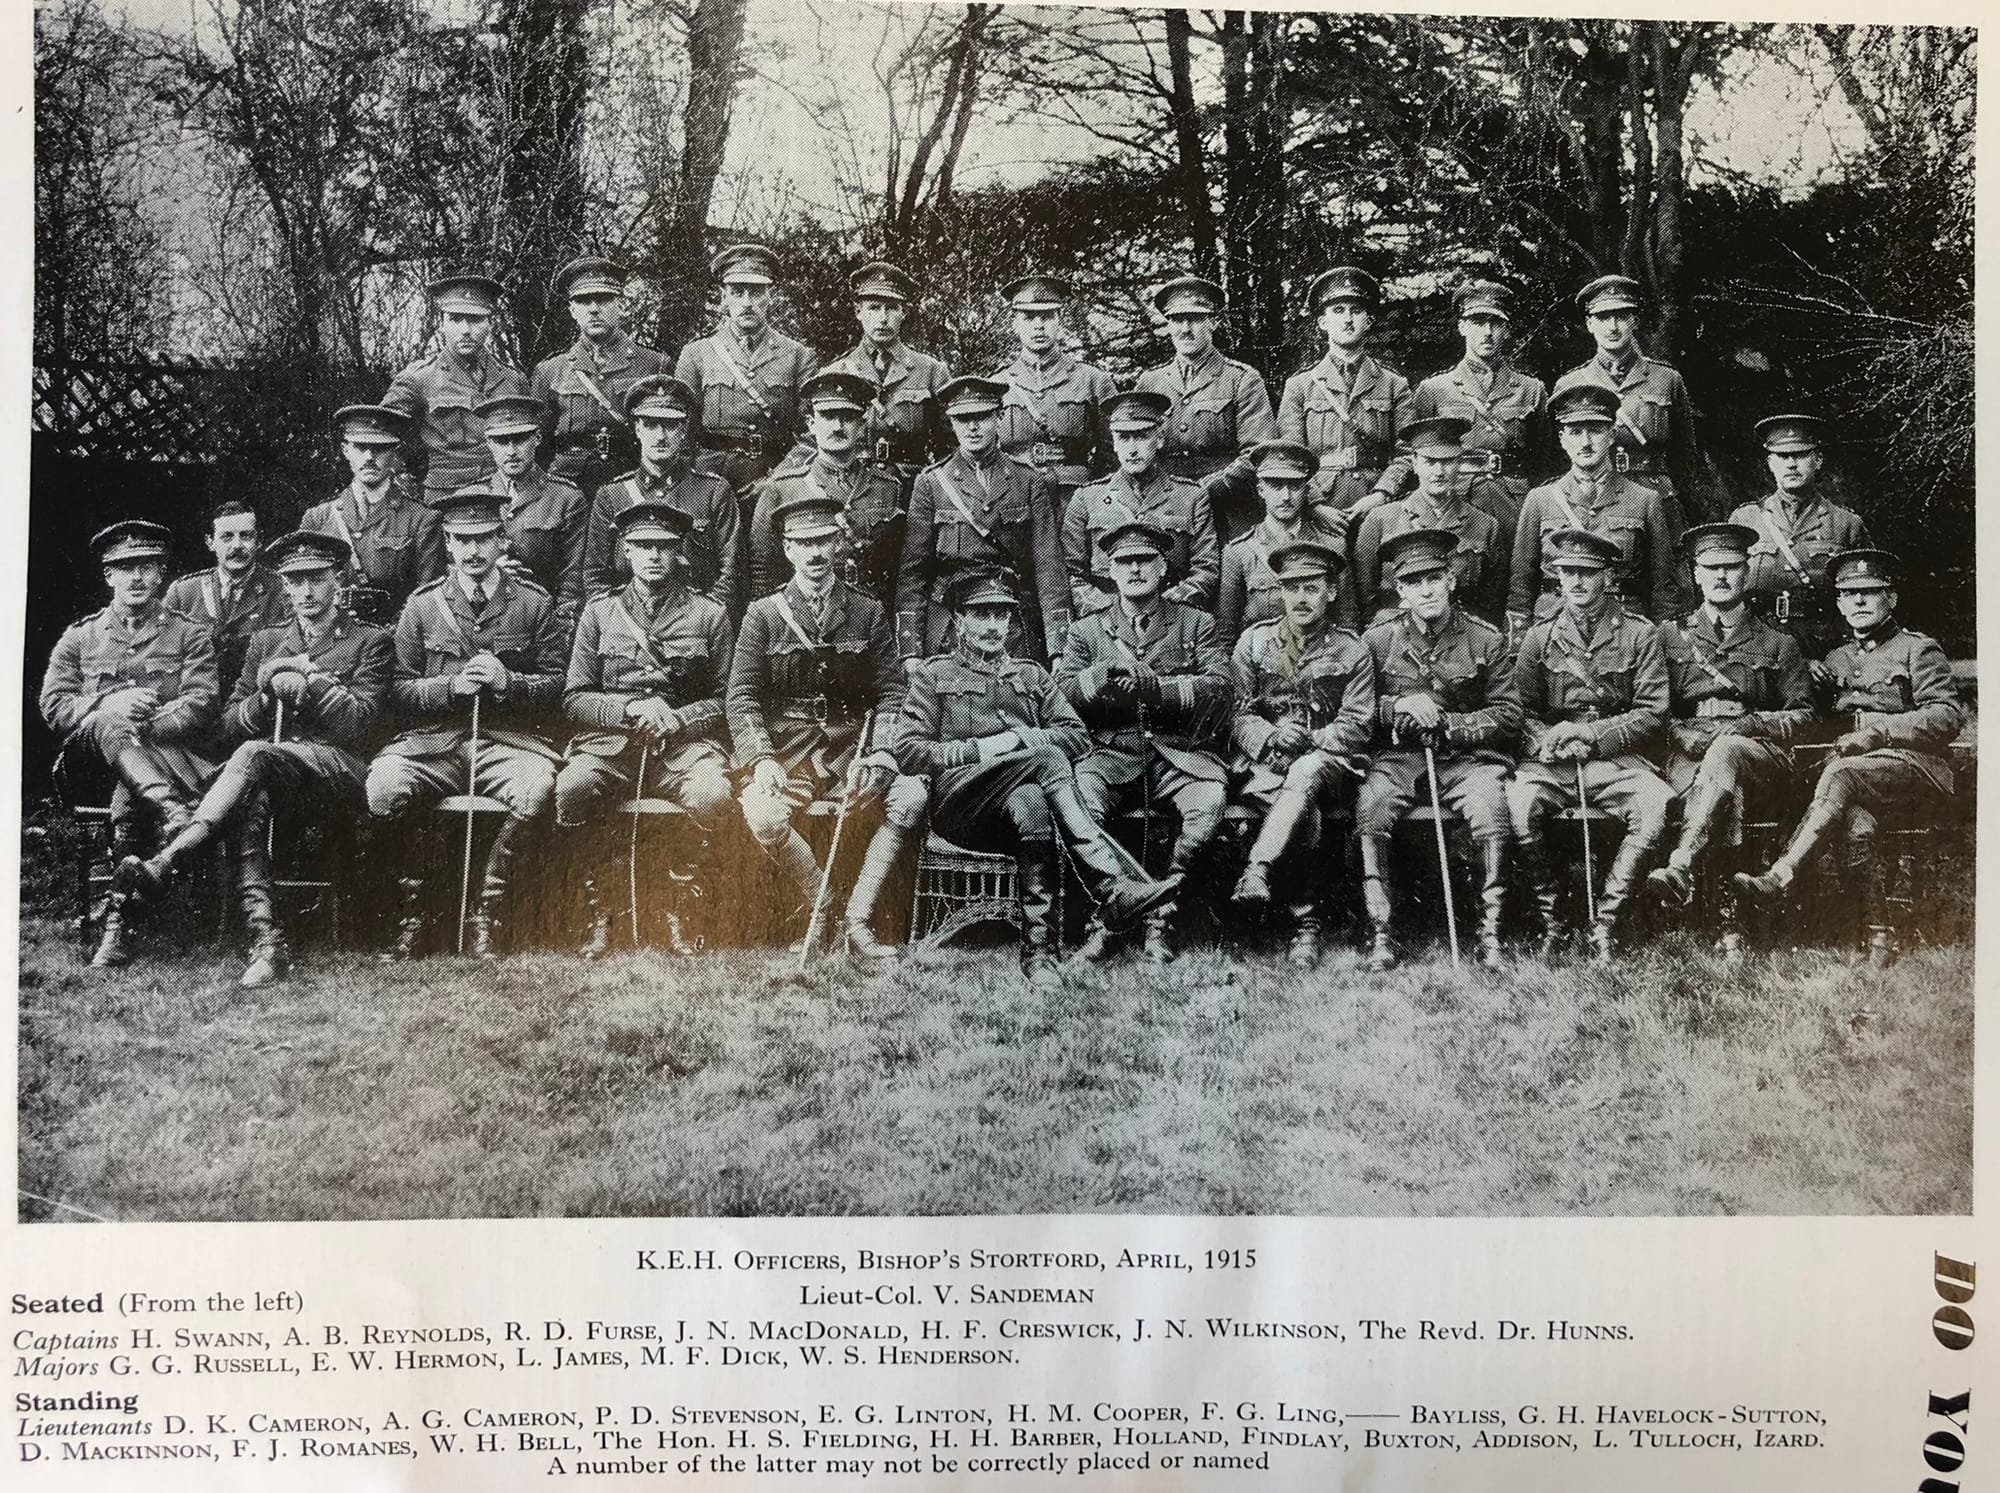 BAYLIS, Gerald William. Quartermaster and Lieutenant KEH. In group photograph taken in Ireland in 1915.